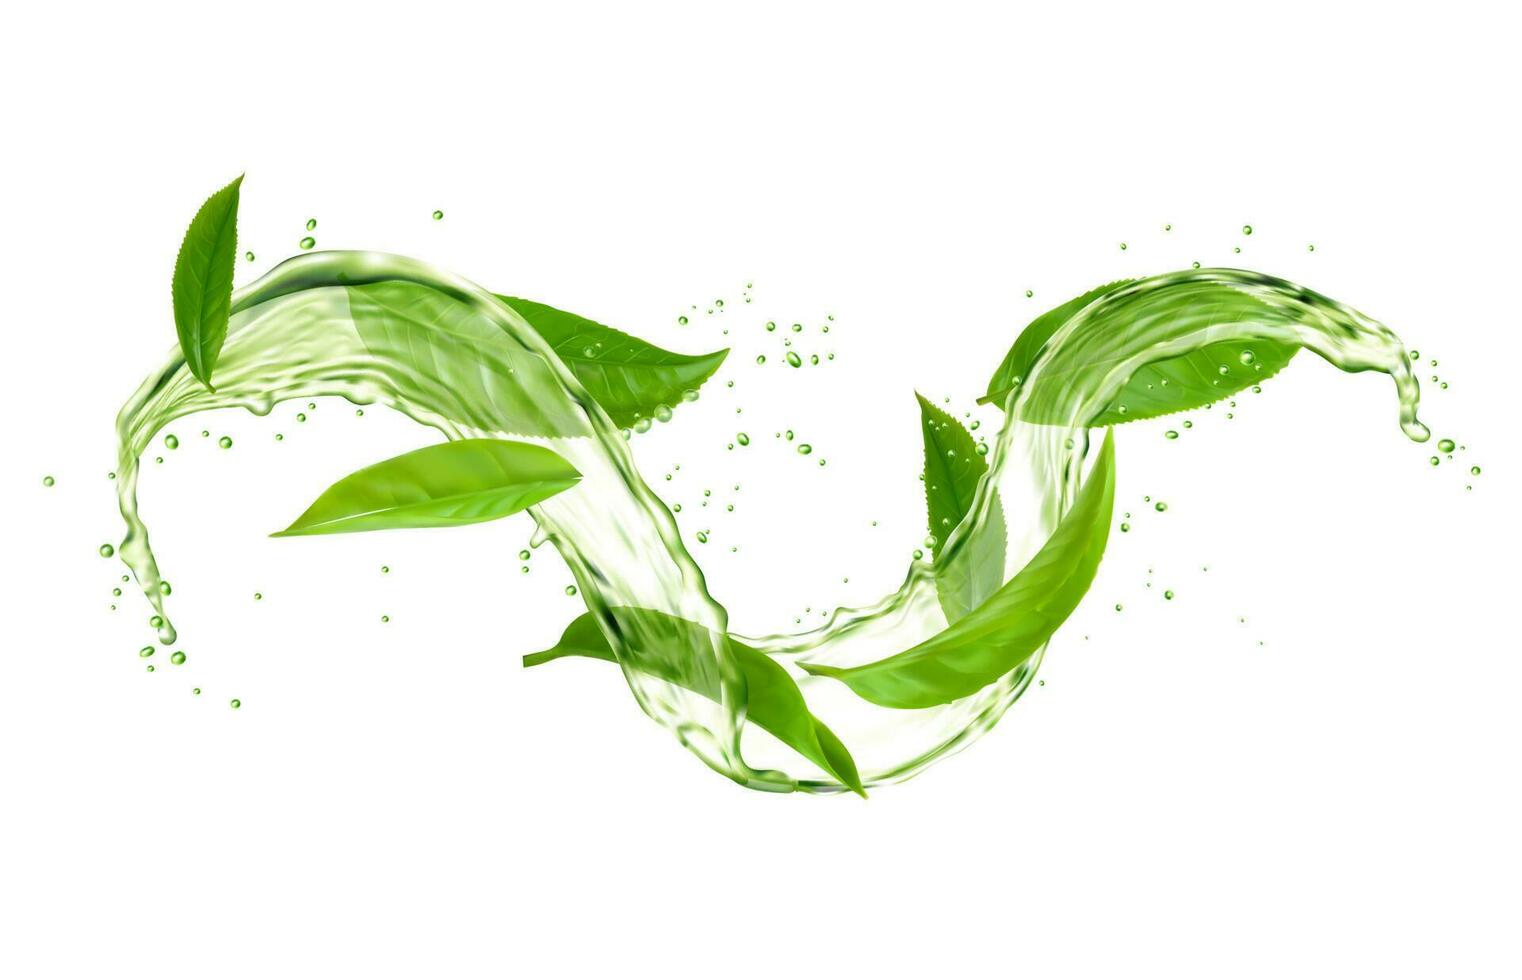 Kräuter- Tee trinken Welle Spritzen mit Grün Tee Blätter vektor